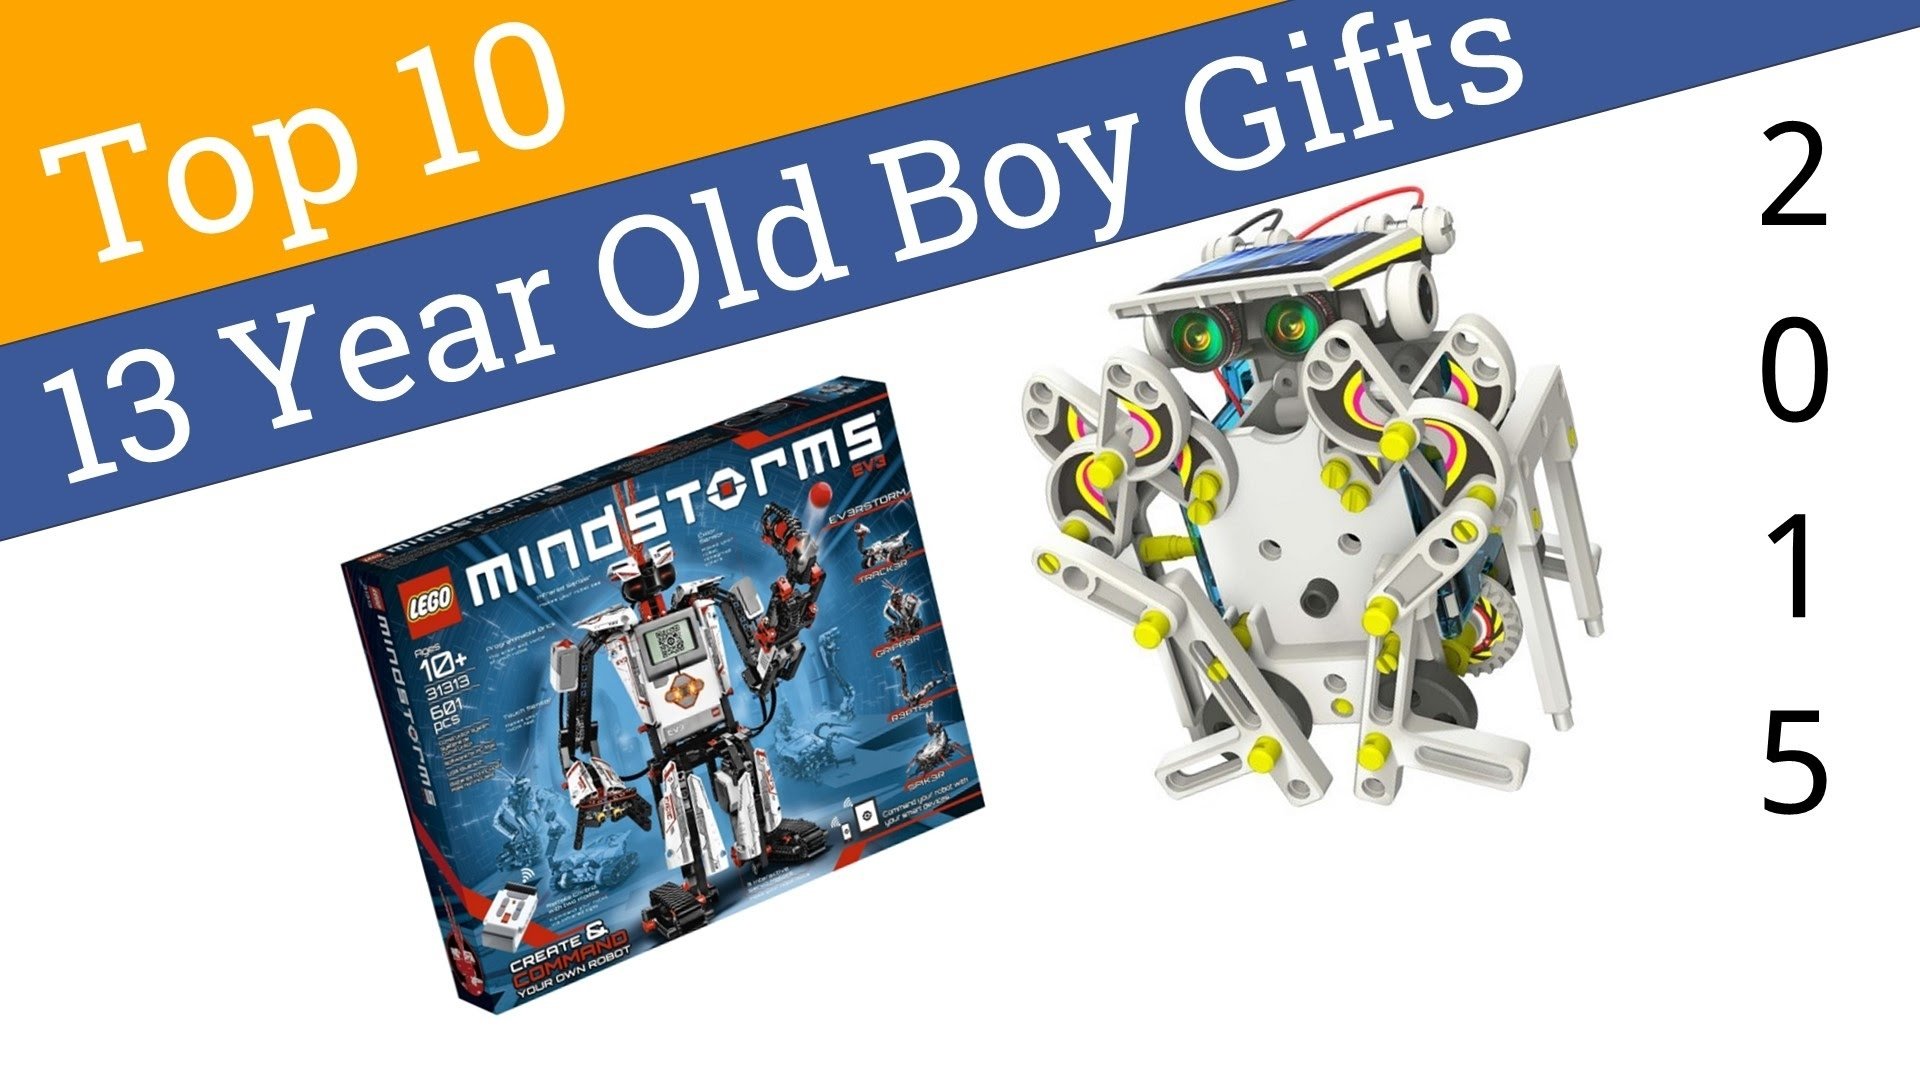 10 Pretty Gift Ideas 10 Year Old Boy 10 best 13 year old boy gifts 2015 youtube 1 2022